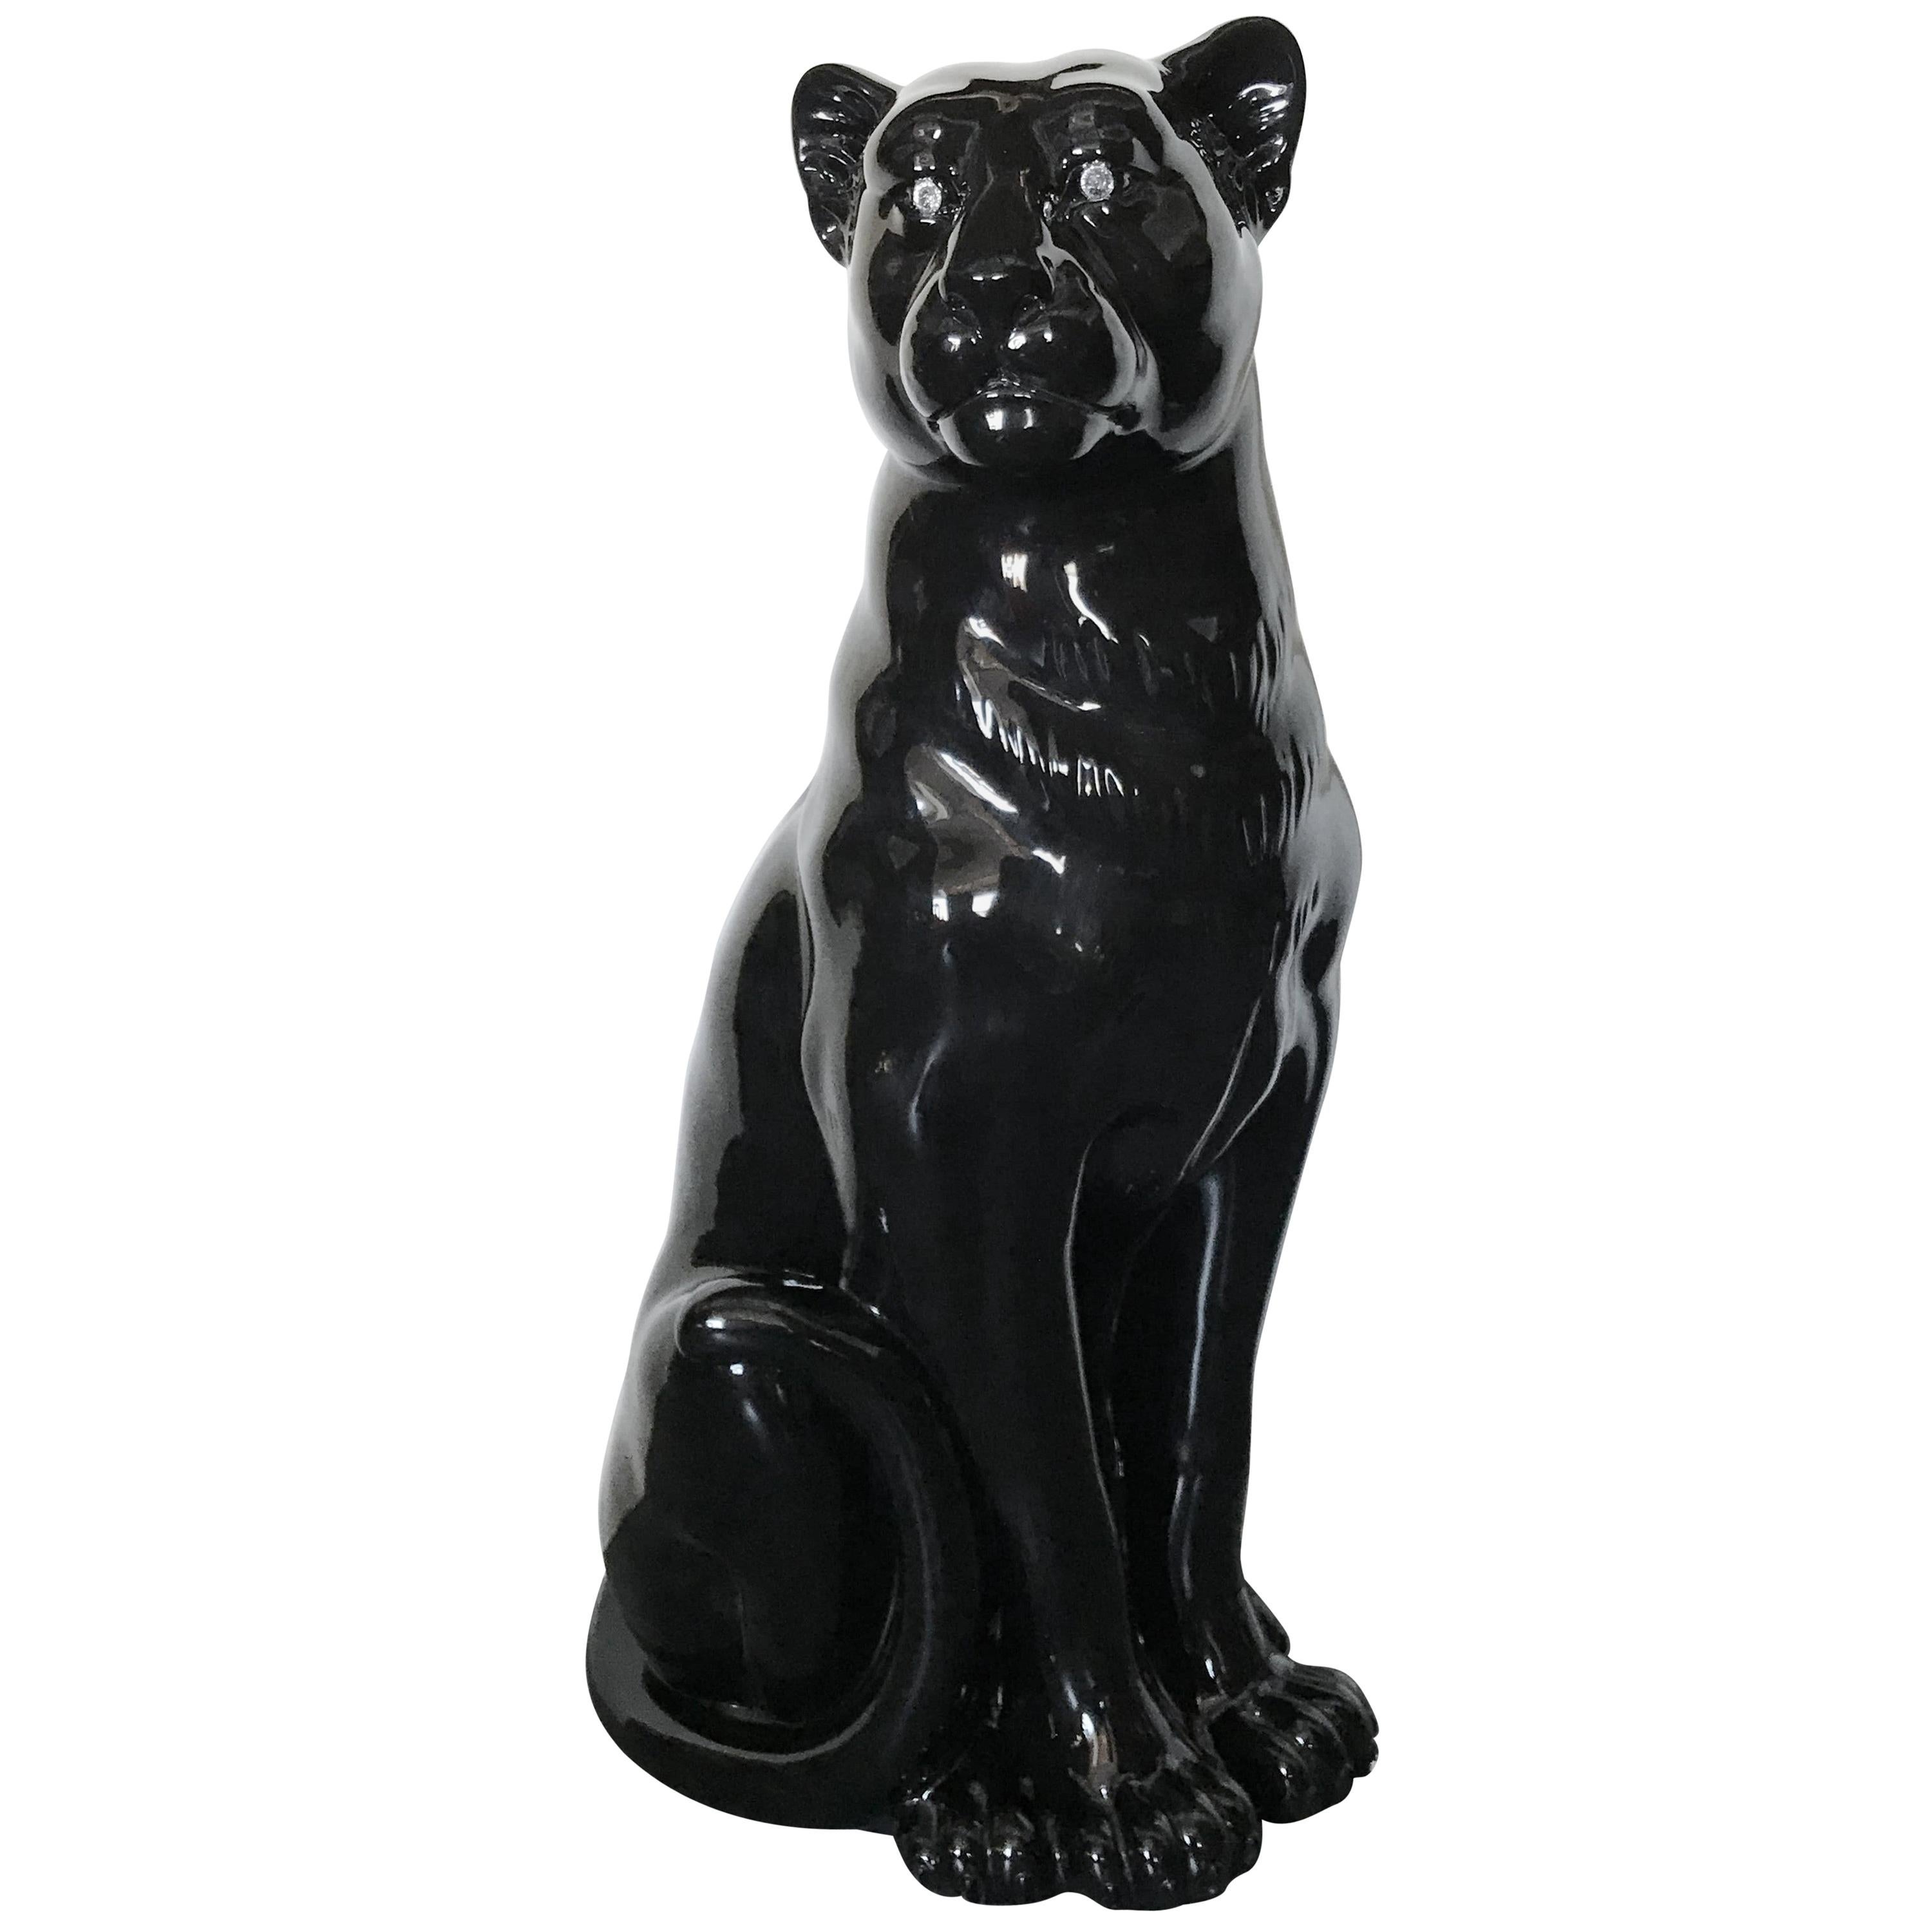 Black Ceramic Puma Sculpture by Fabio Ltd FINAL CLEARANCE SALE